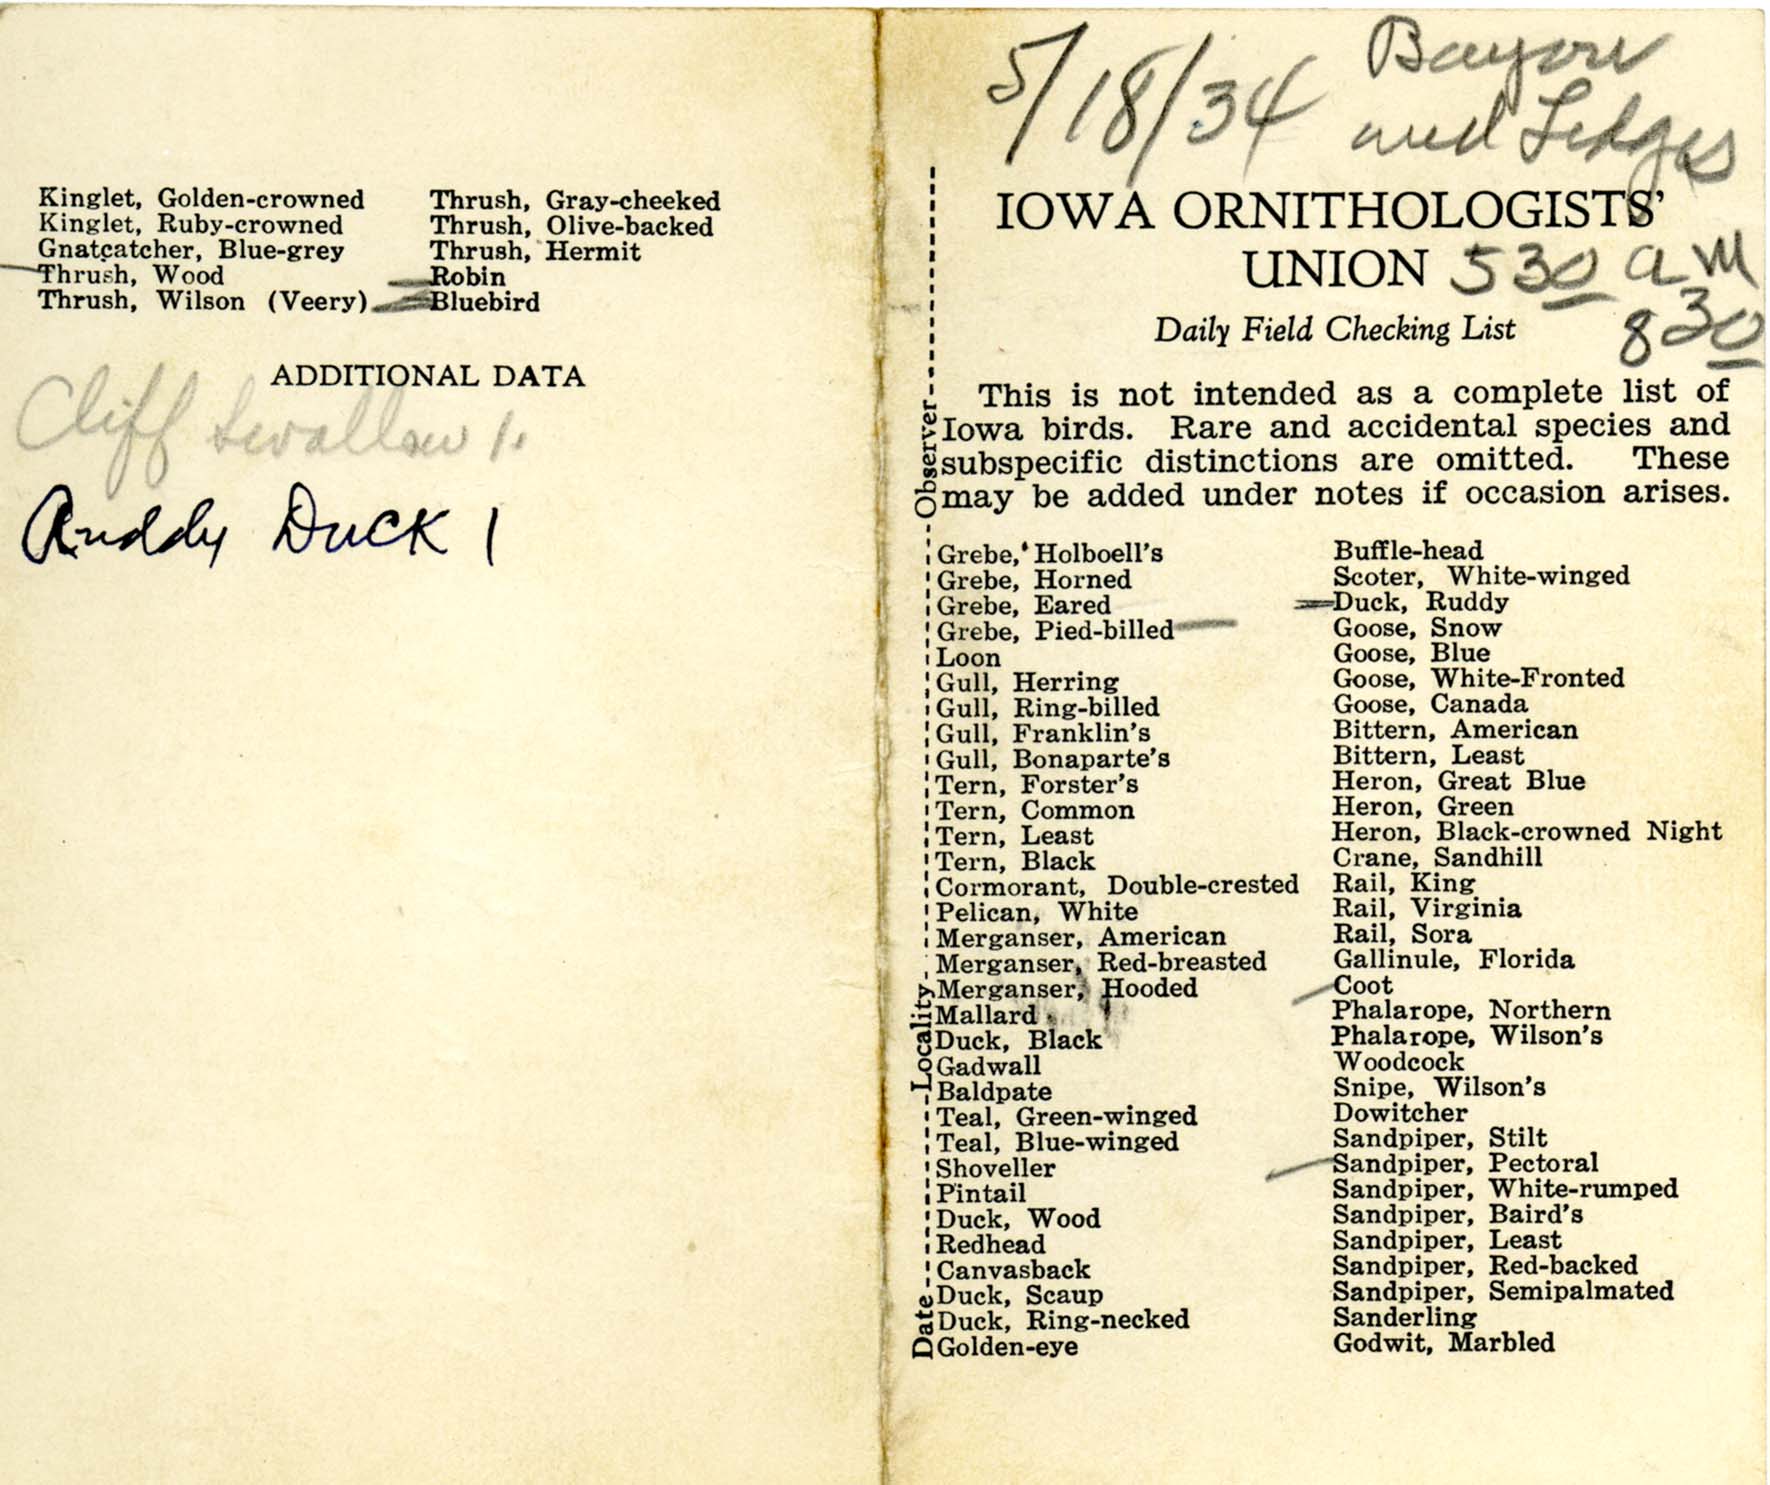 Daily field checking list, Walter Rosene, May 18, 1934